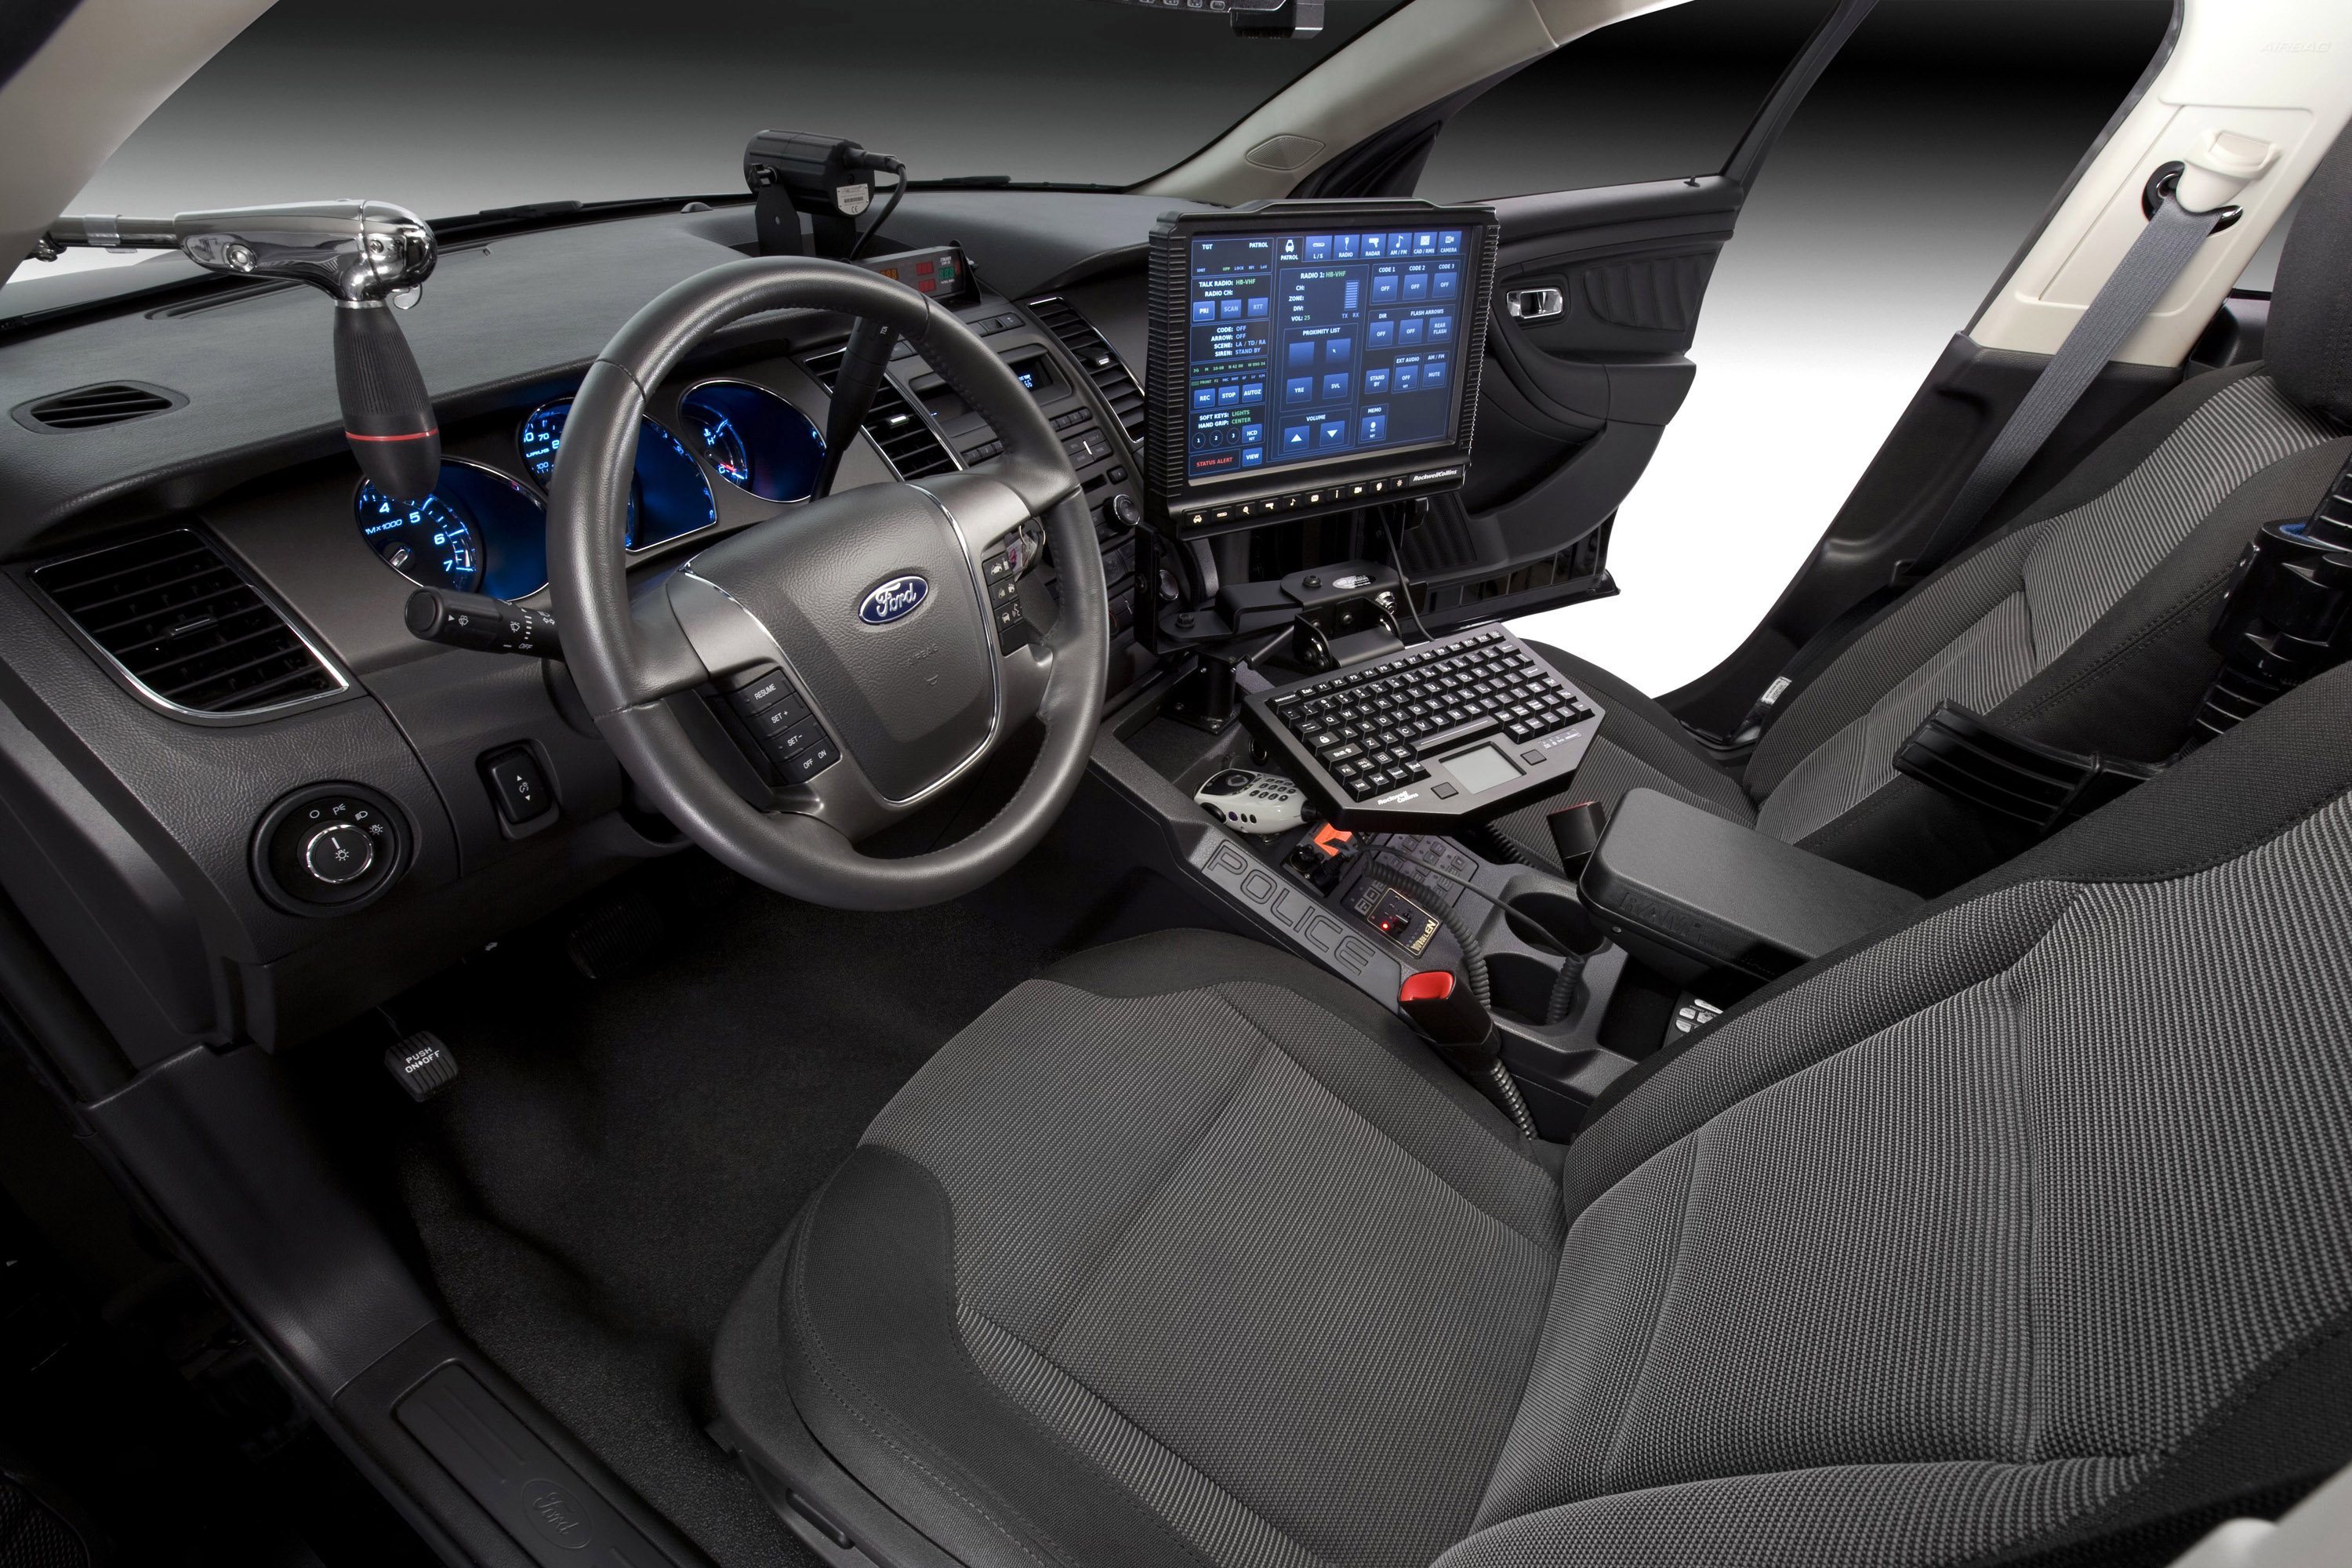 Cars inside. Ford Explorer Interceptor салон. Ford Taurus Police Interceptor. Ford Explorer Police Interceptor салон. Форд Таурус интерцептор 2018.